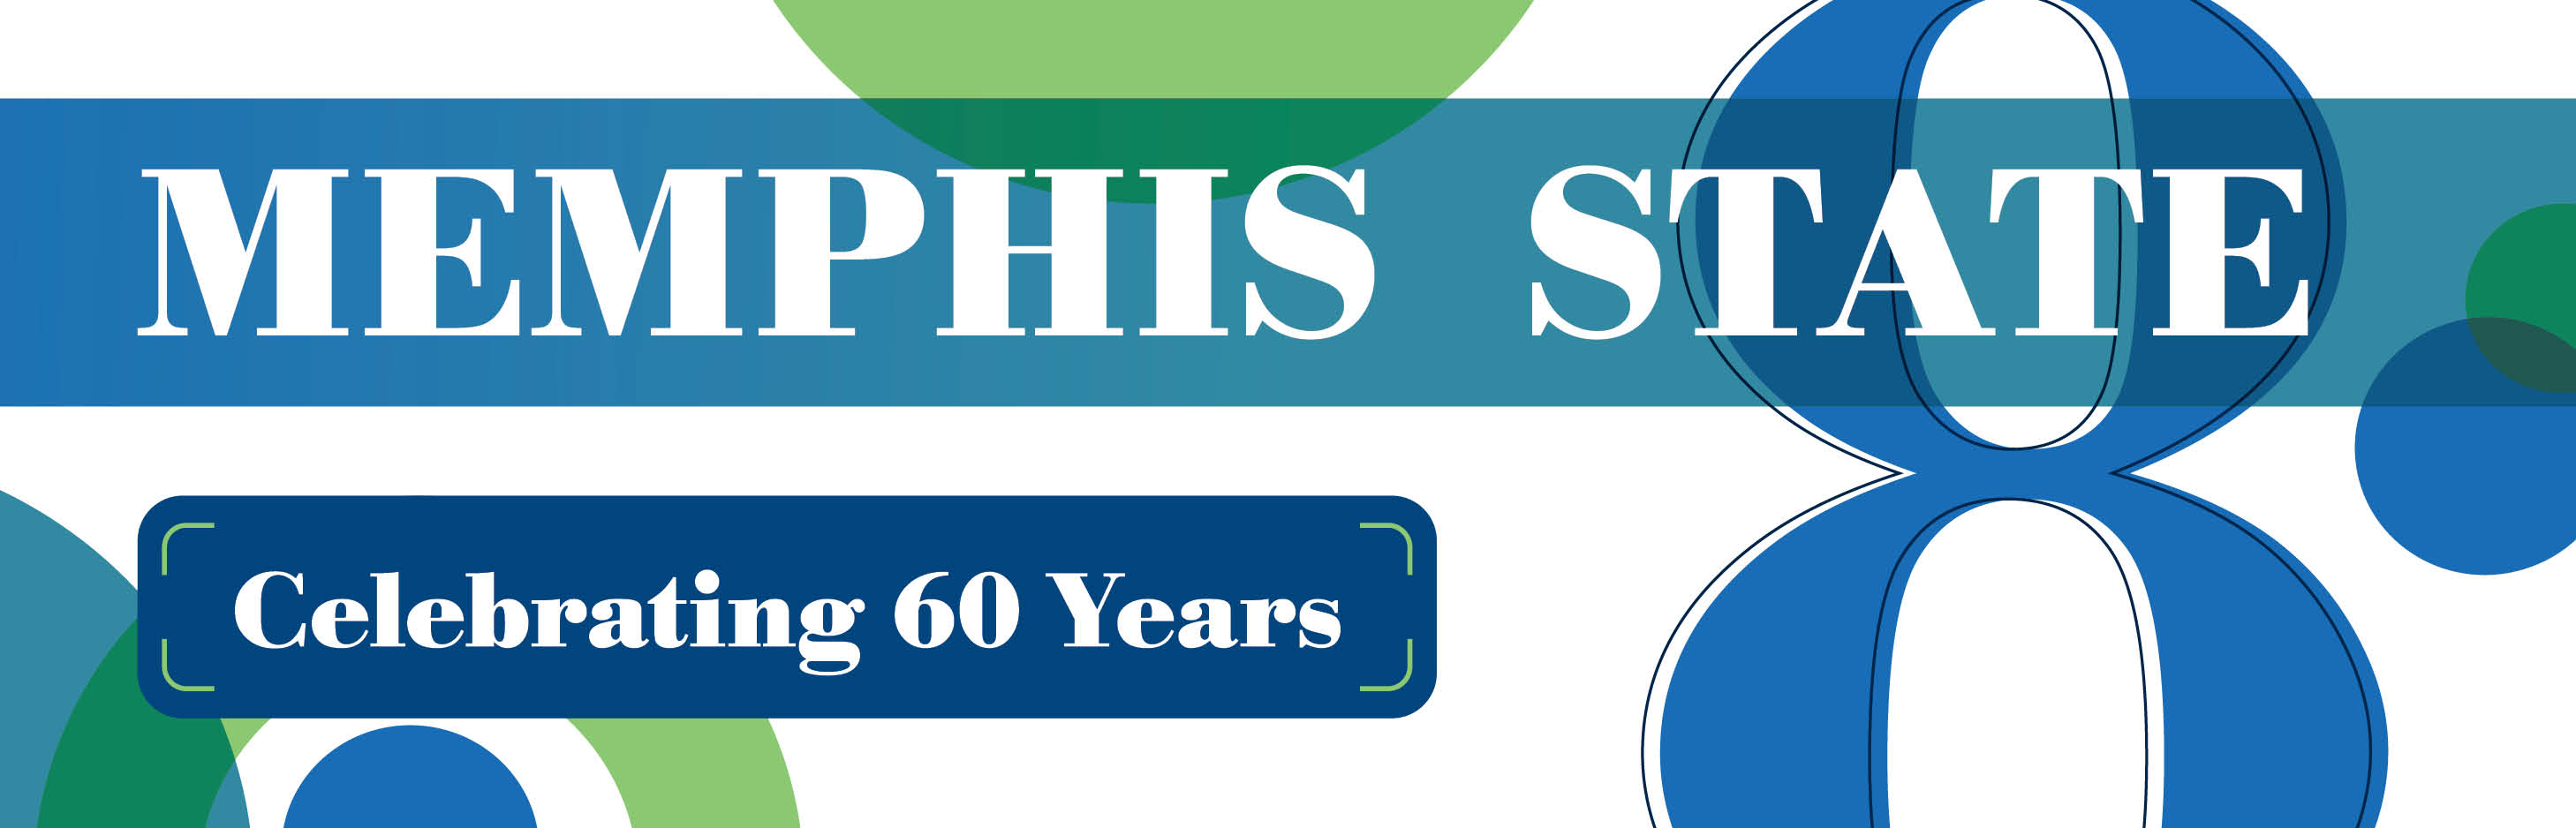 Memphis State Celebrating 60 Years